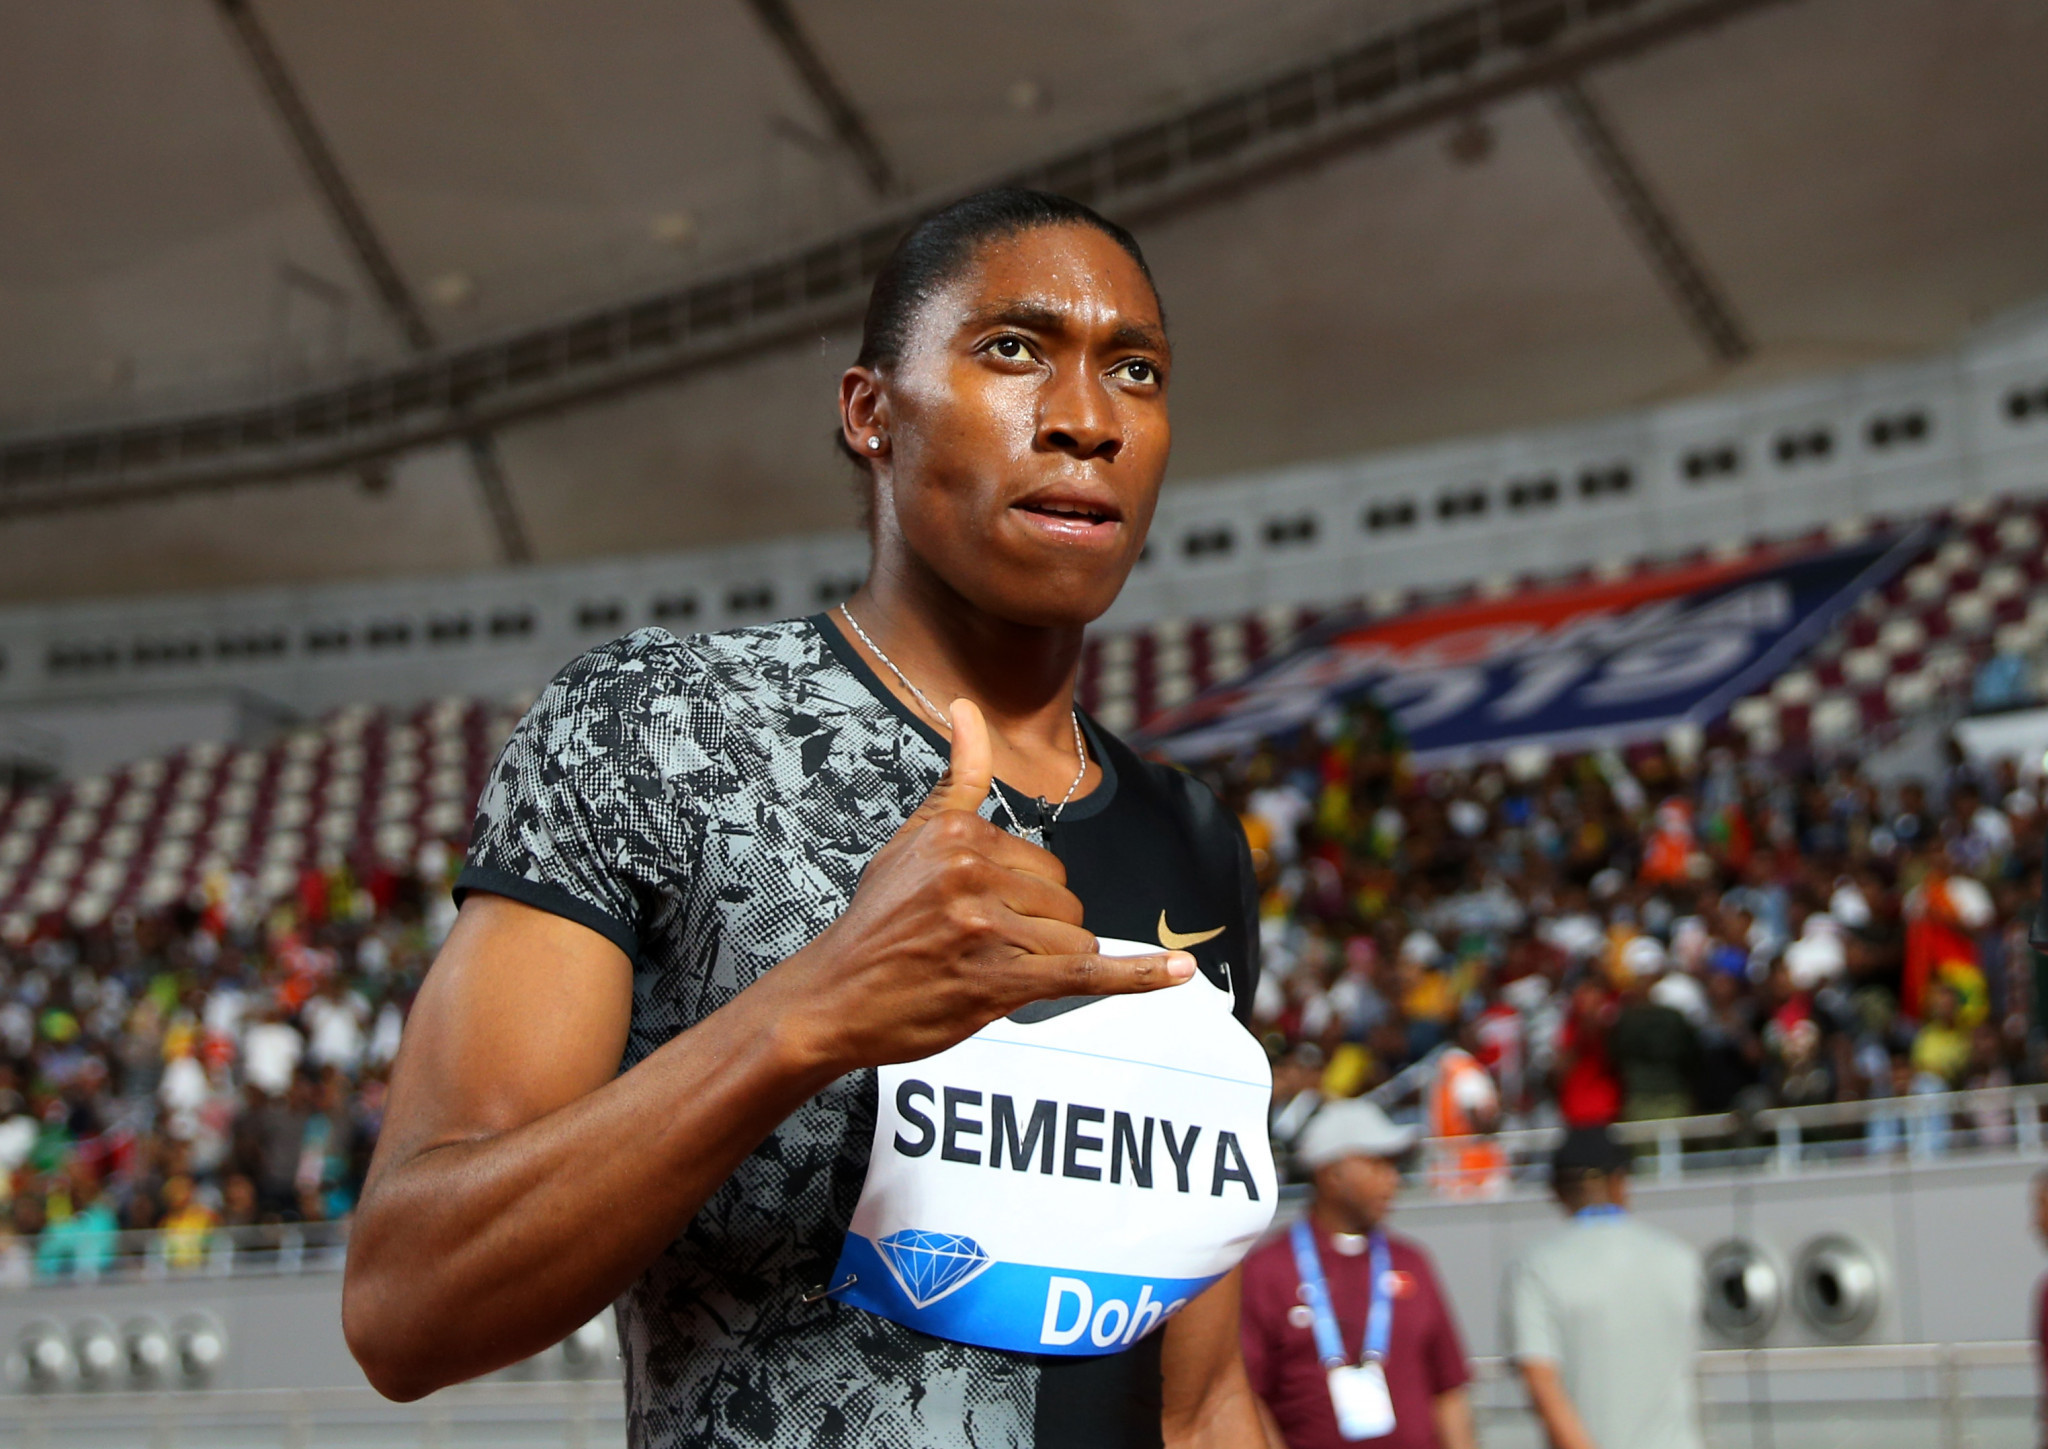  "I will keep on running" says Semenya after setting 800m meeting record at Doha Diamond League